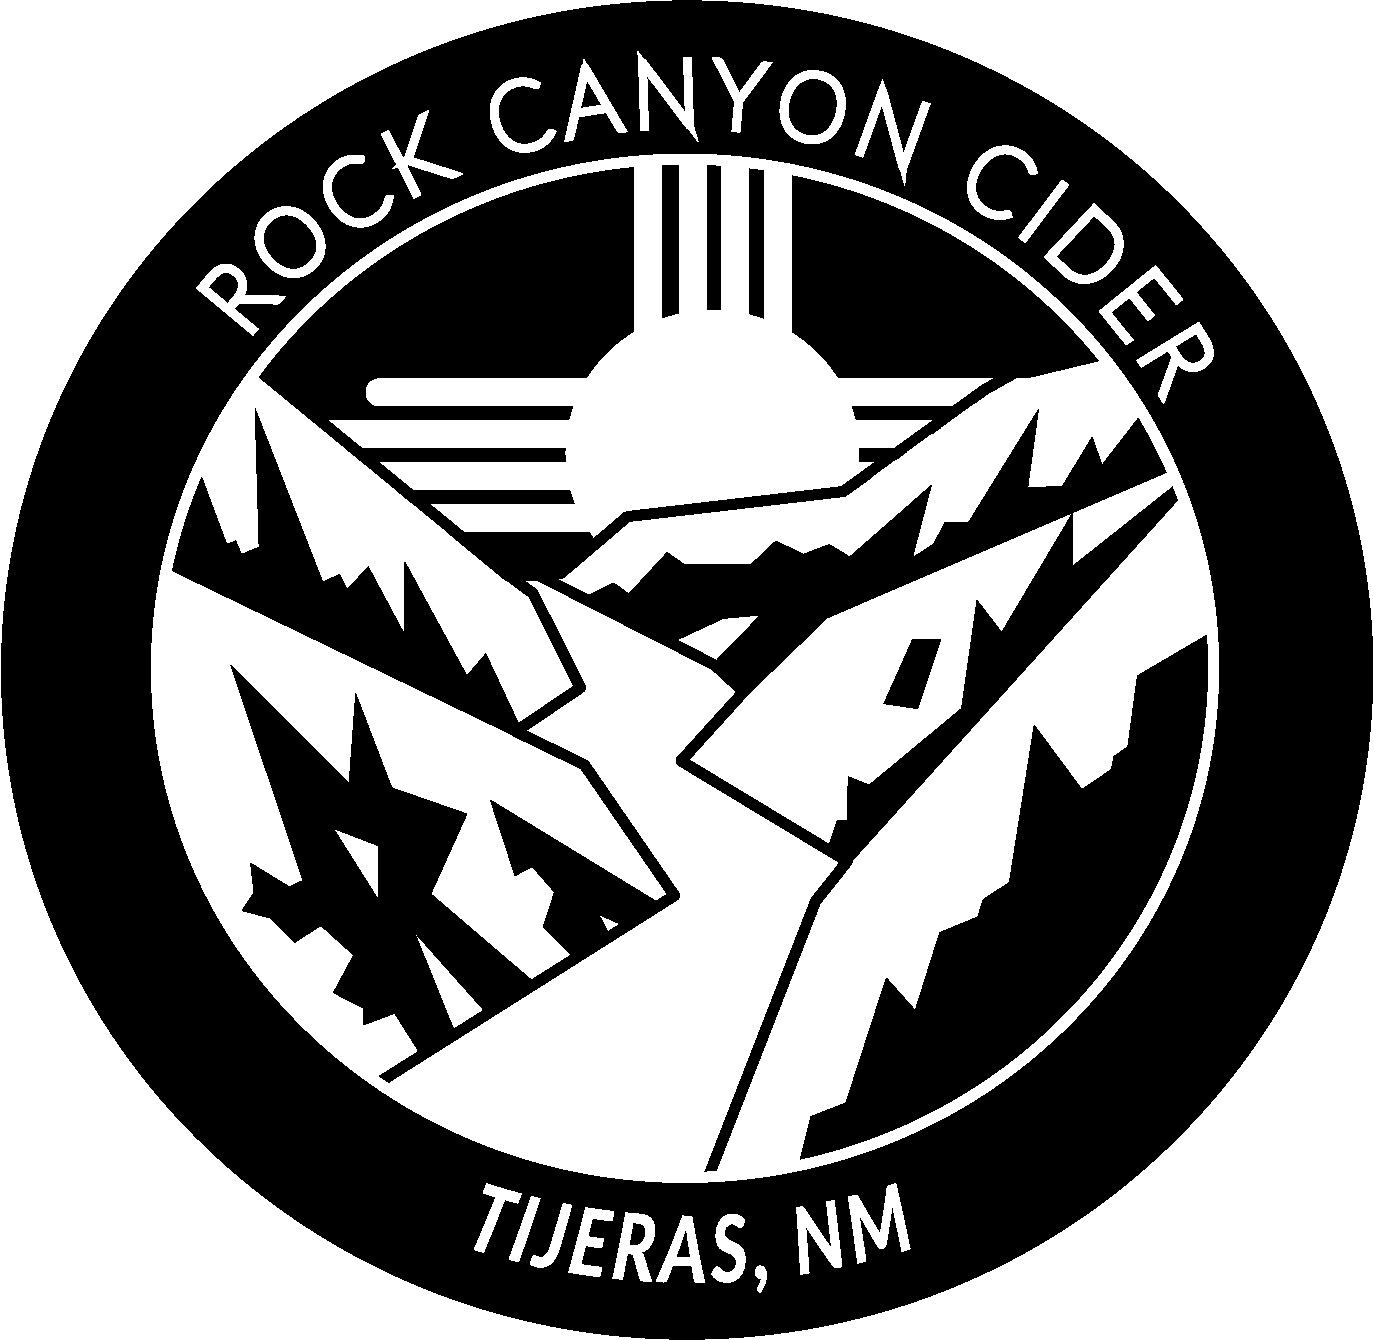 Rock Canyon Taproom